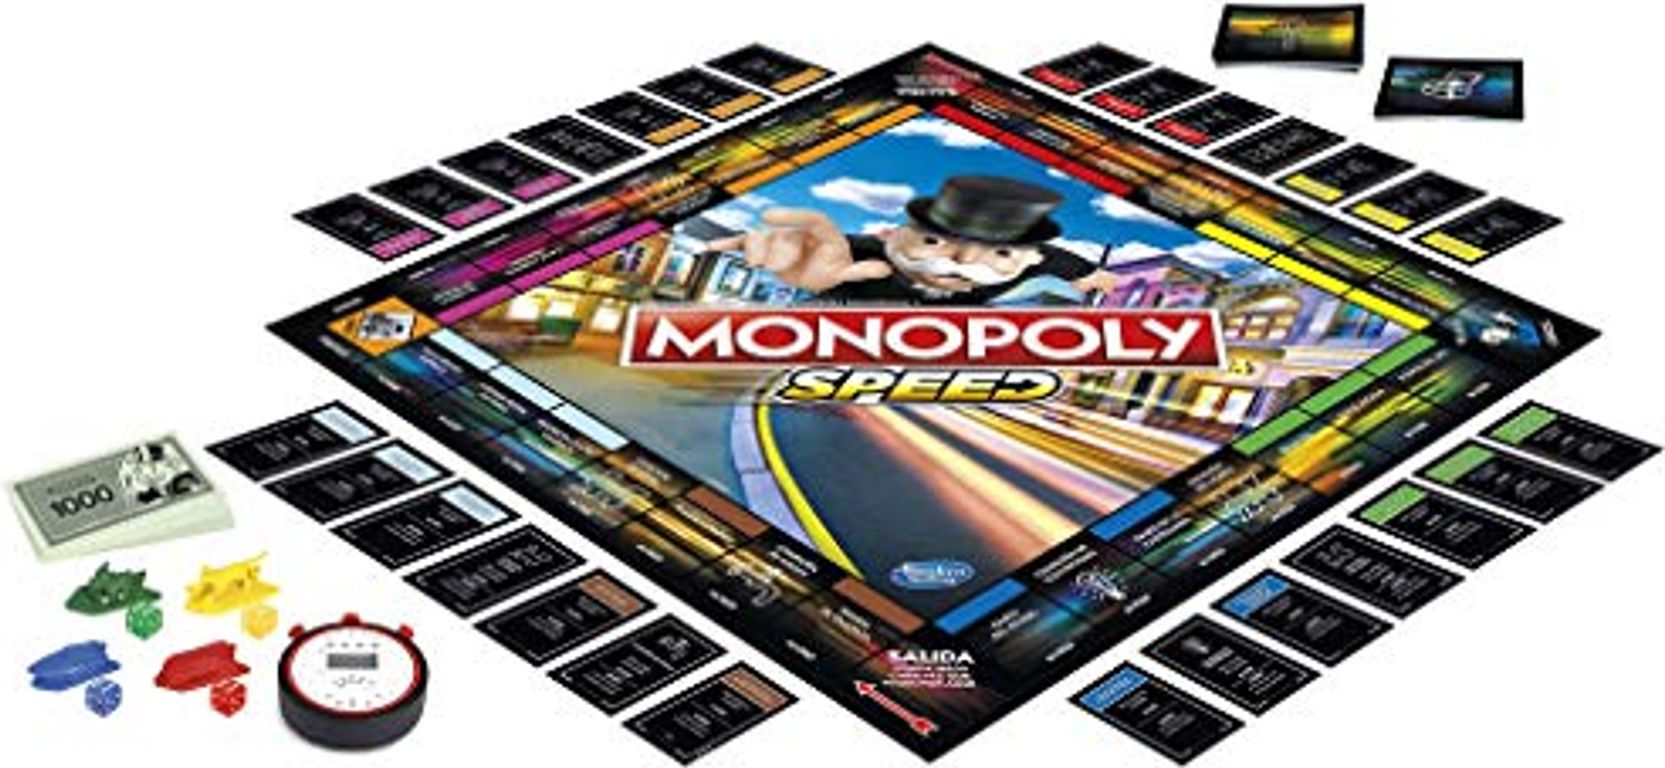 Monopoly Speed componenti